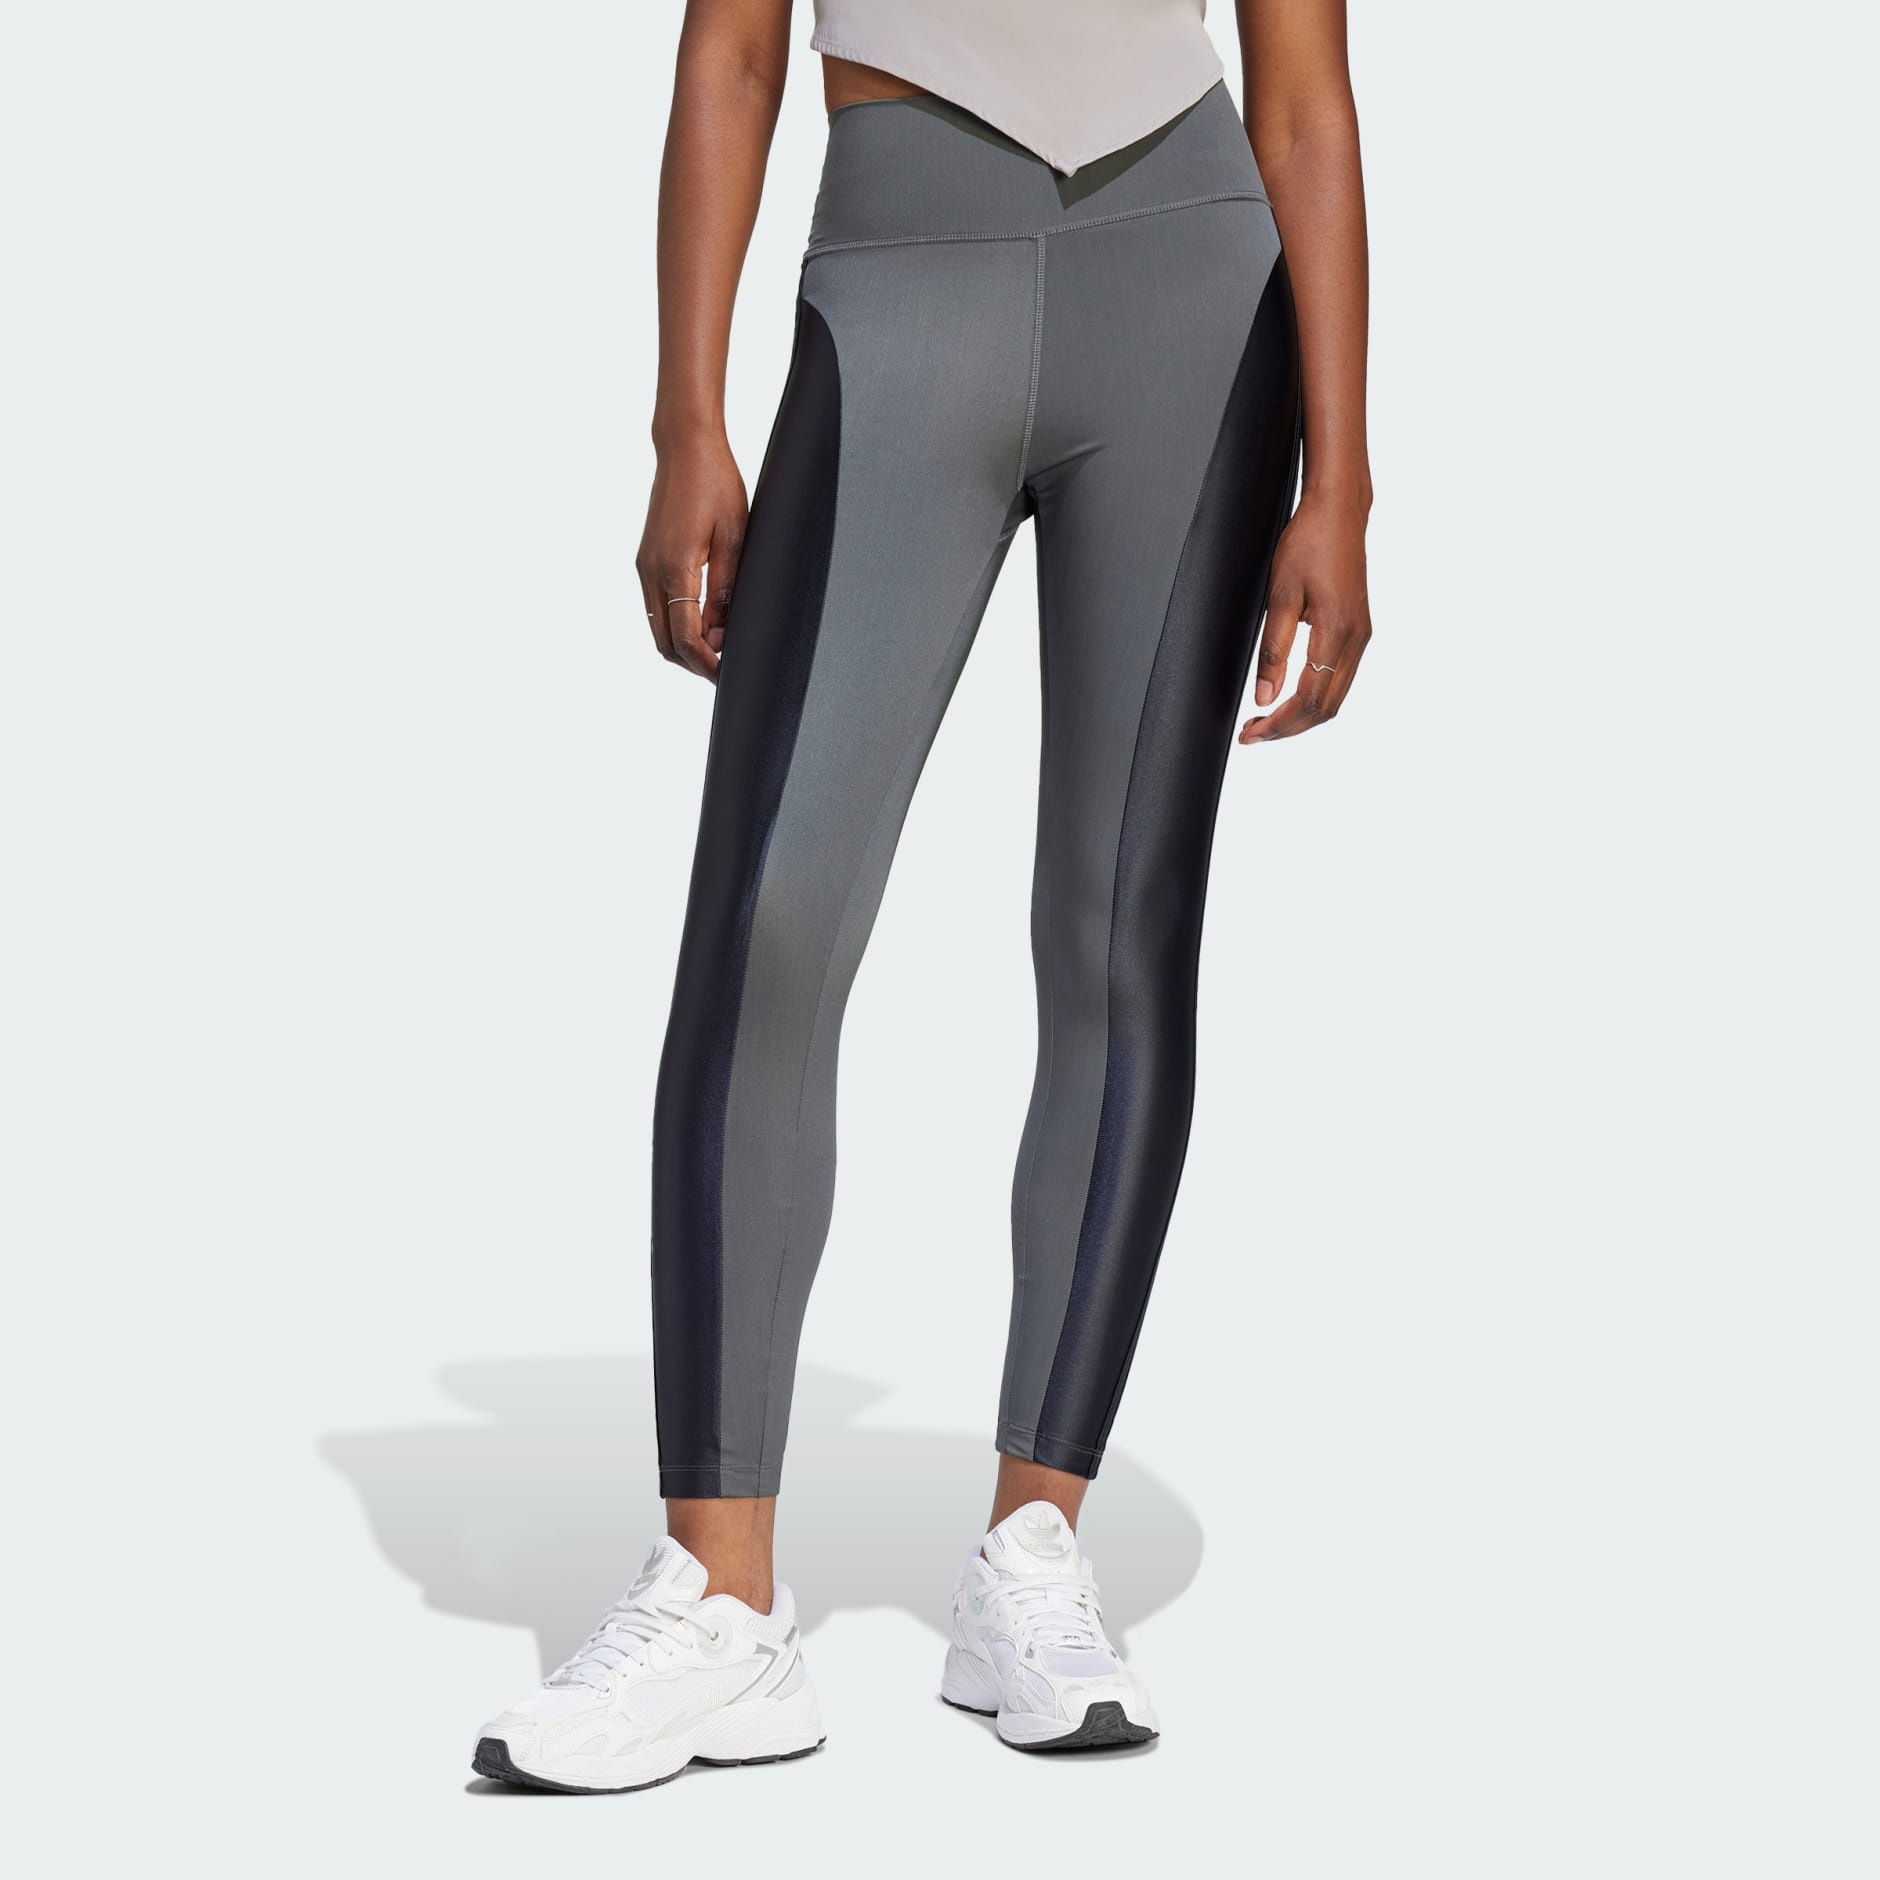 Nike Women's Colorblocked Leggings